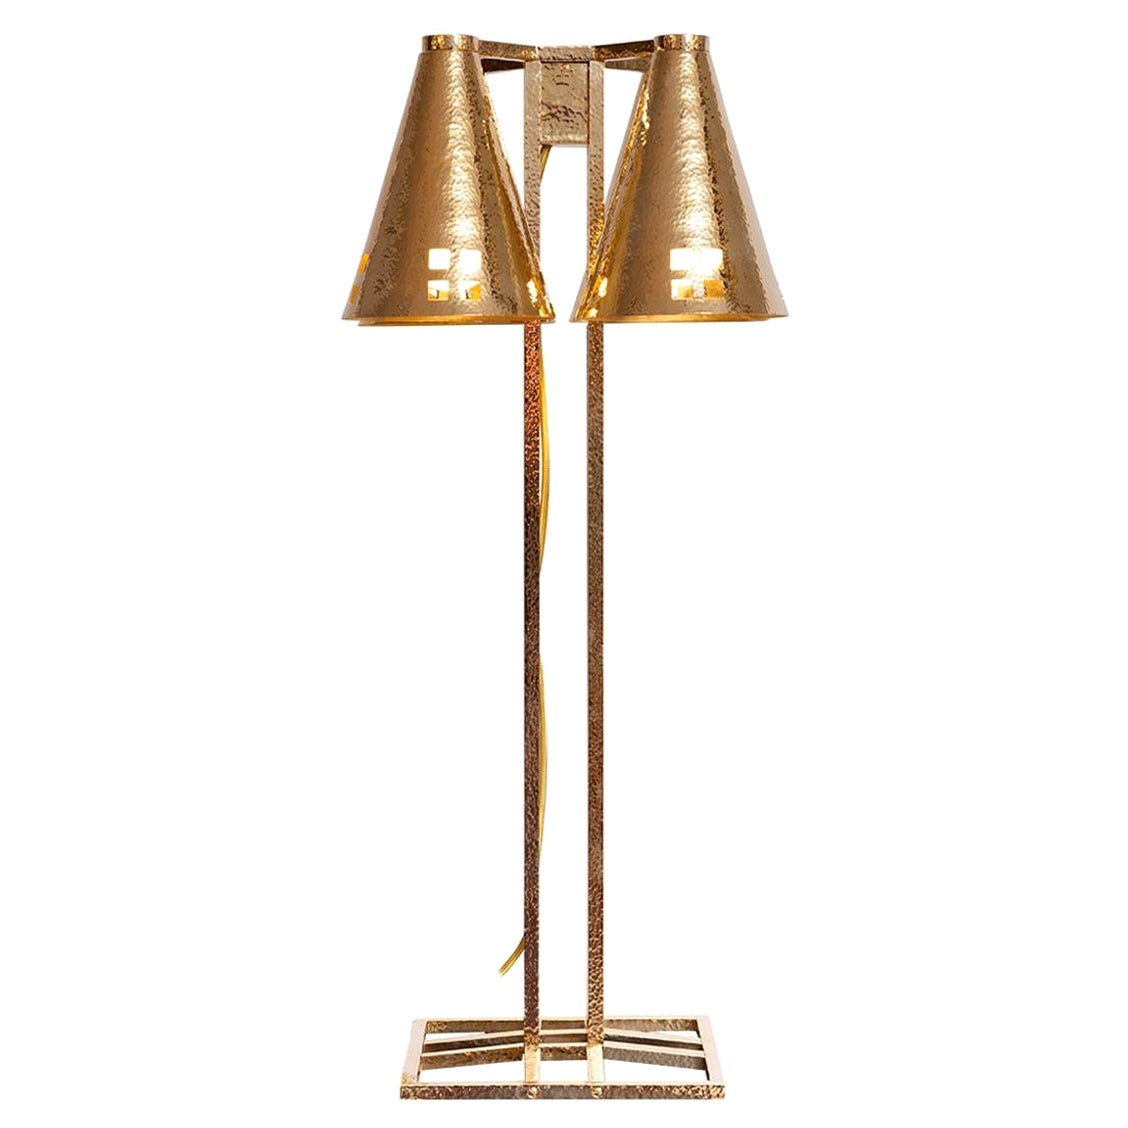 Cubistic Josef Hoffmann / Wiener Werkstätte Table Lamp, Re Edition For Sale